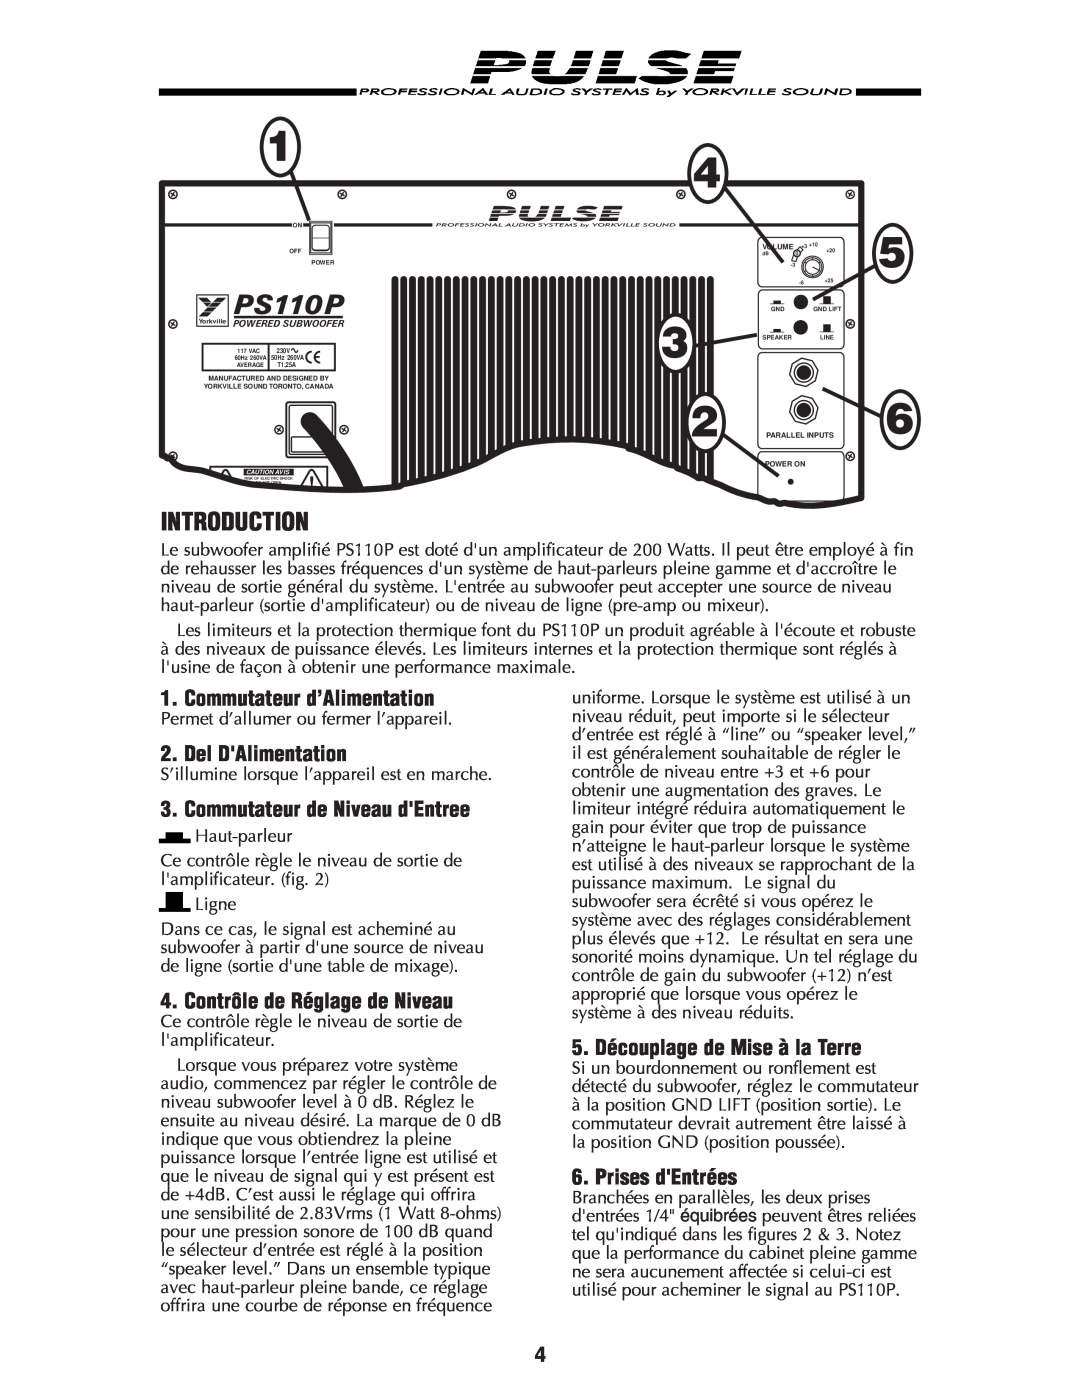 Yorkville Sound PS110P manual Introduction, Commutateur d’Alimentation, Del DAlimentation, Commutateur de Niveau dEntree 